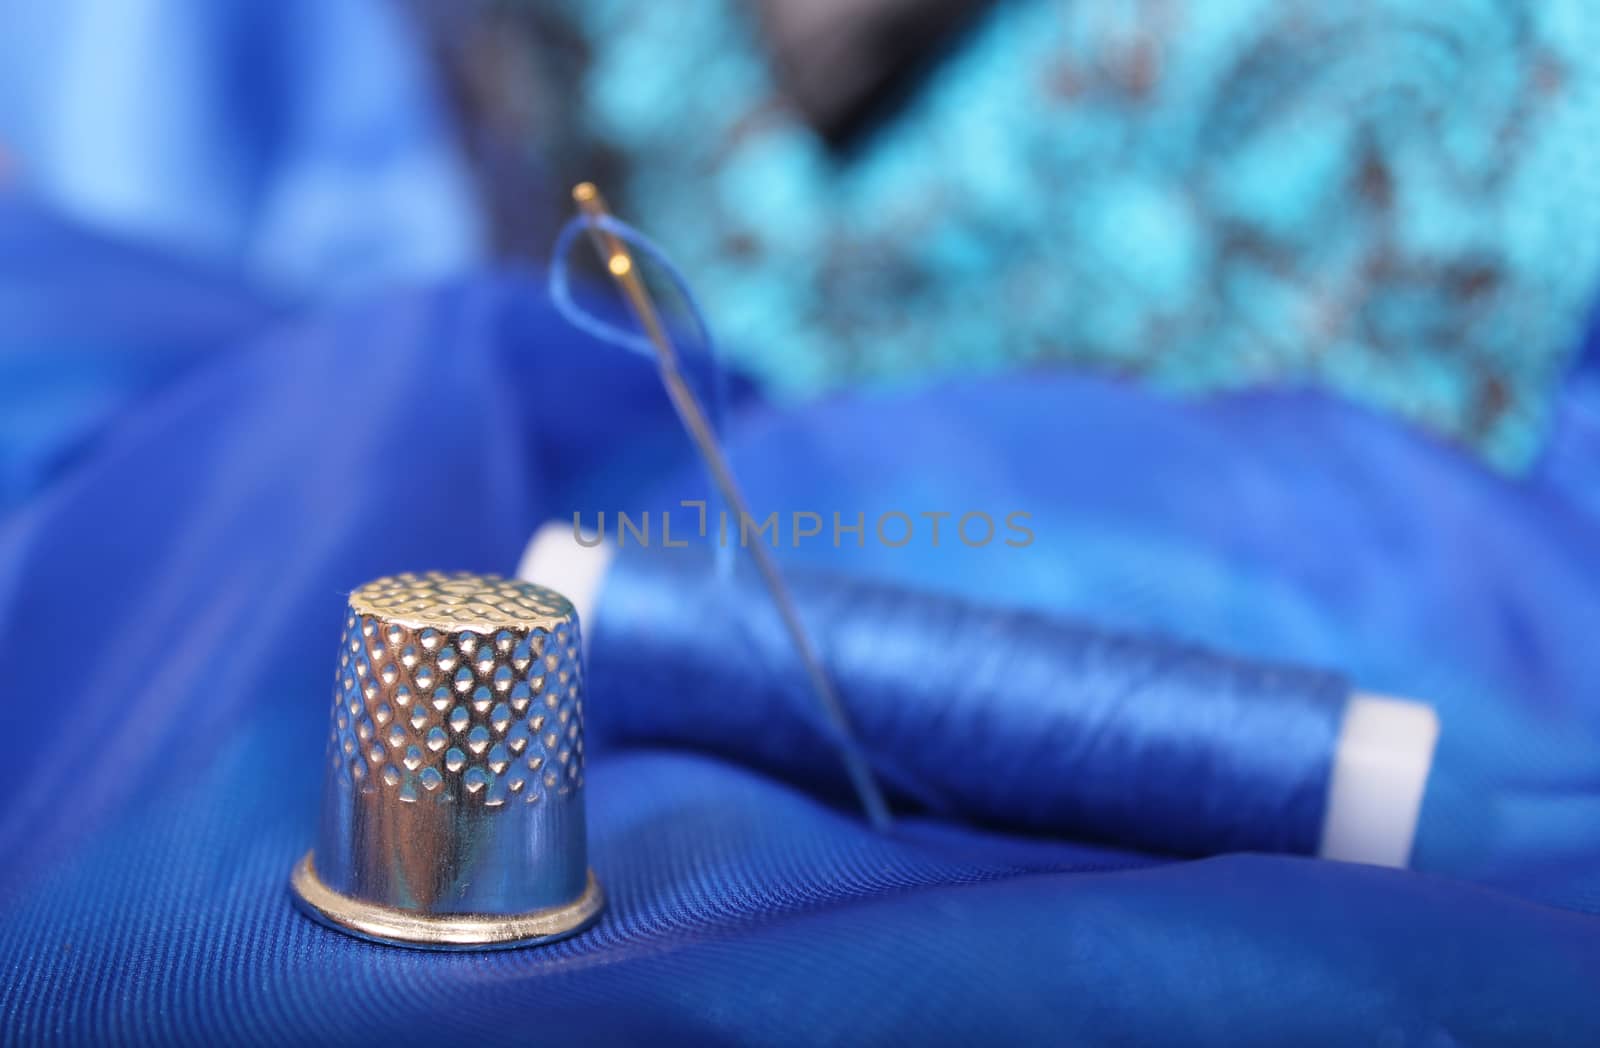 Thimble and Blue Thread on Blue Fabric Shallow DOF